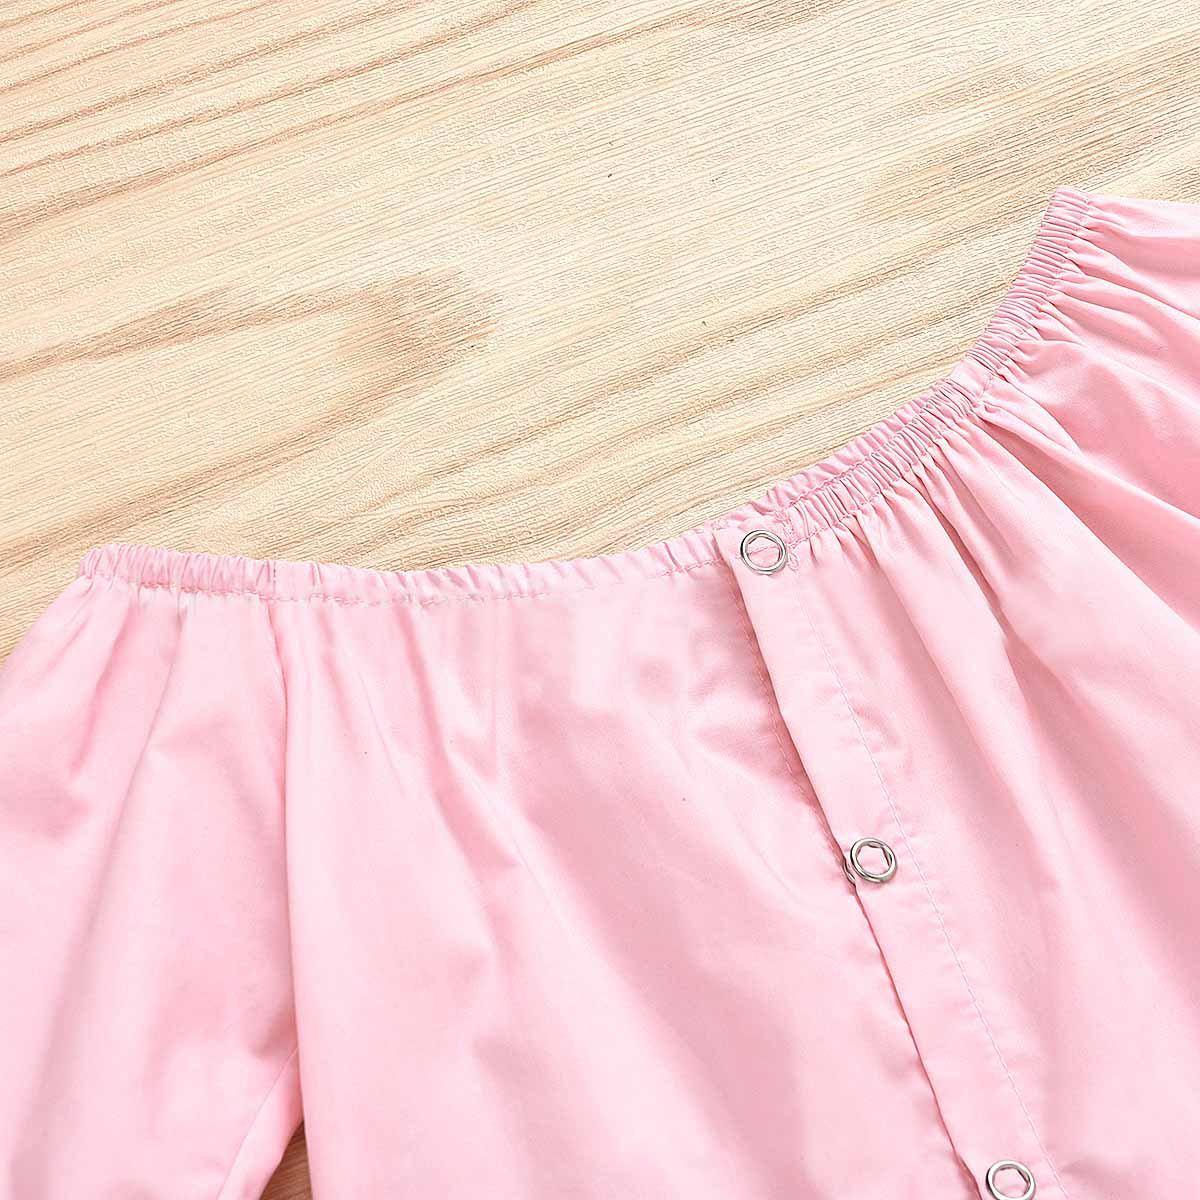 2-Piece Toddler Girl Skirt Set pawlulu